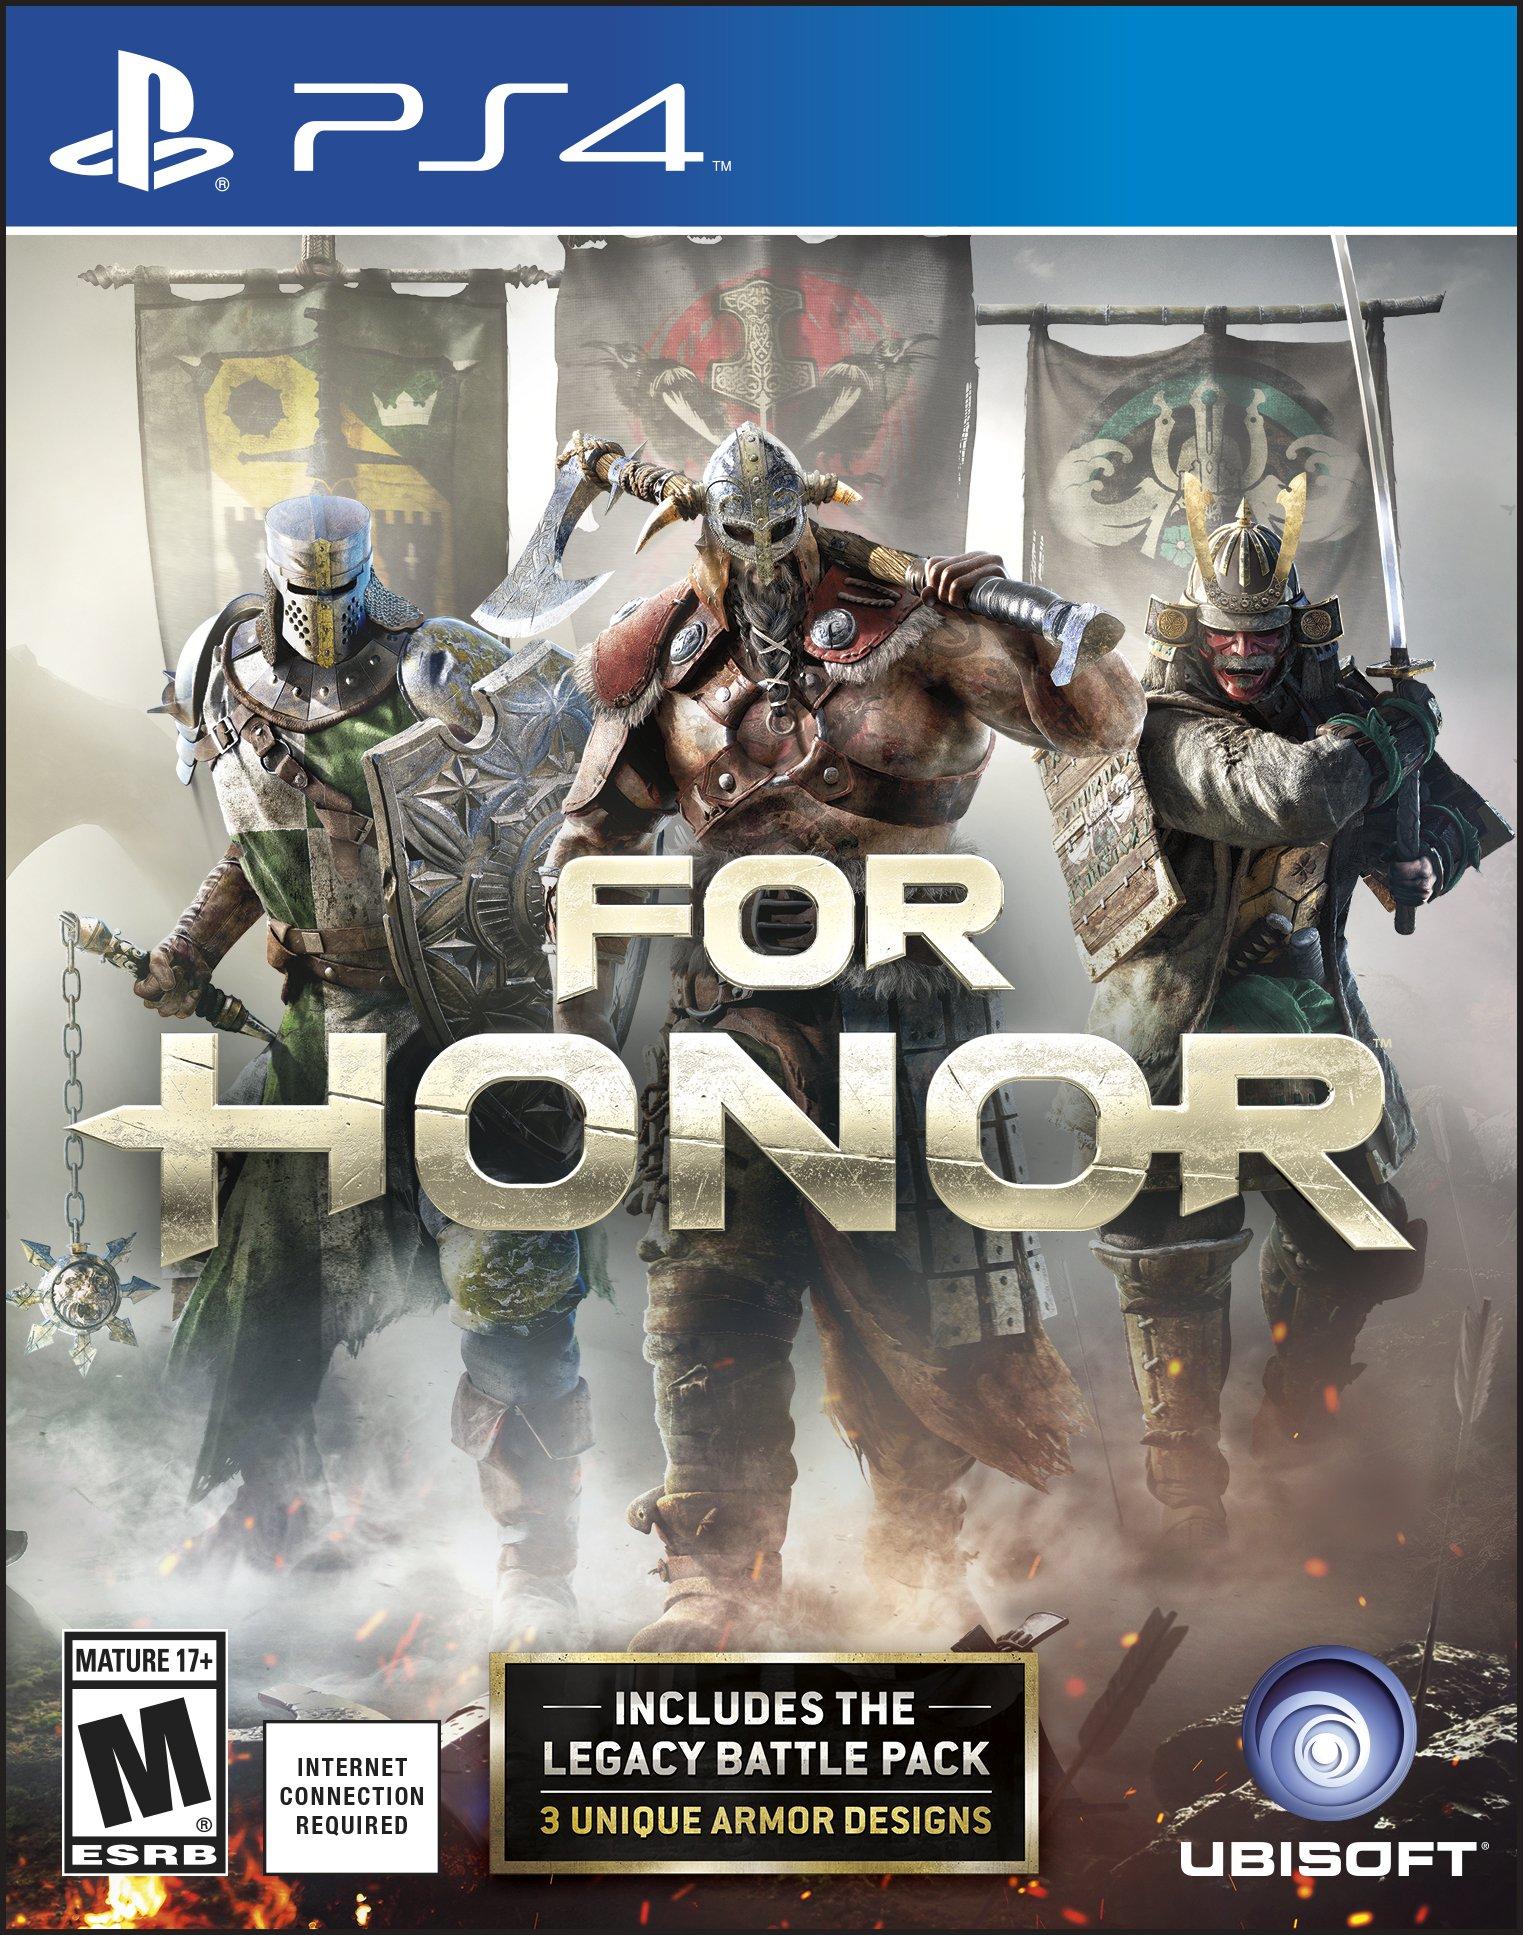 For PlayStation | Honor - GameStop 4 4 | PlayStation